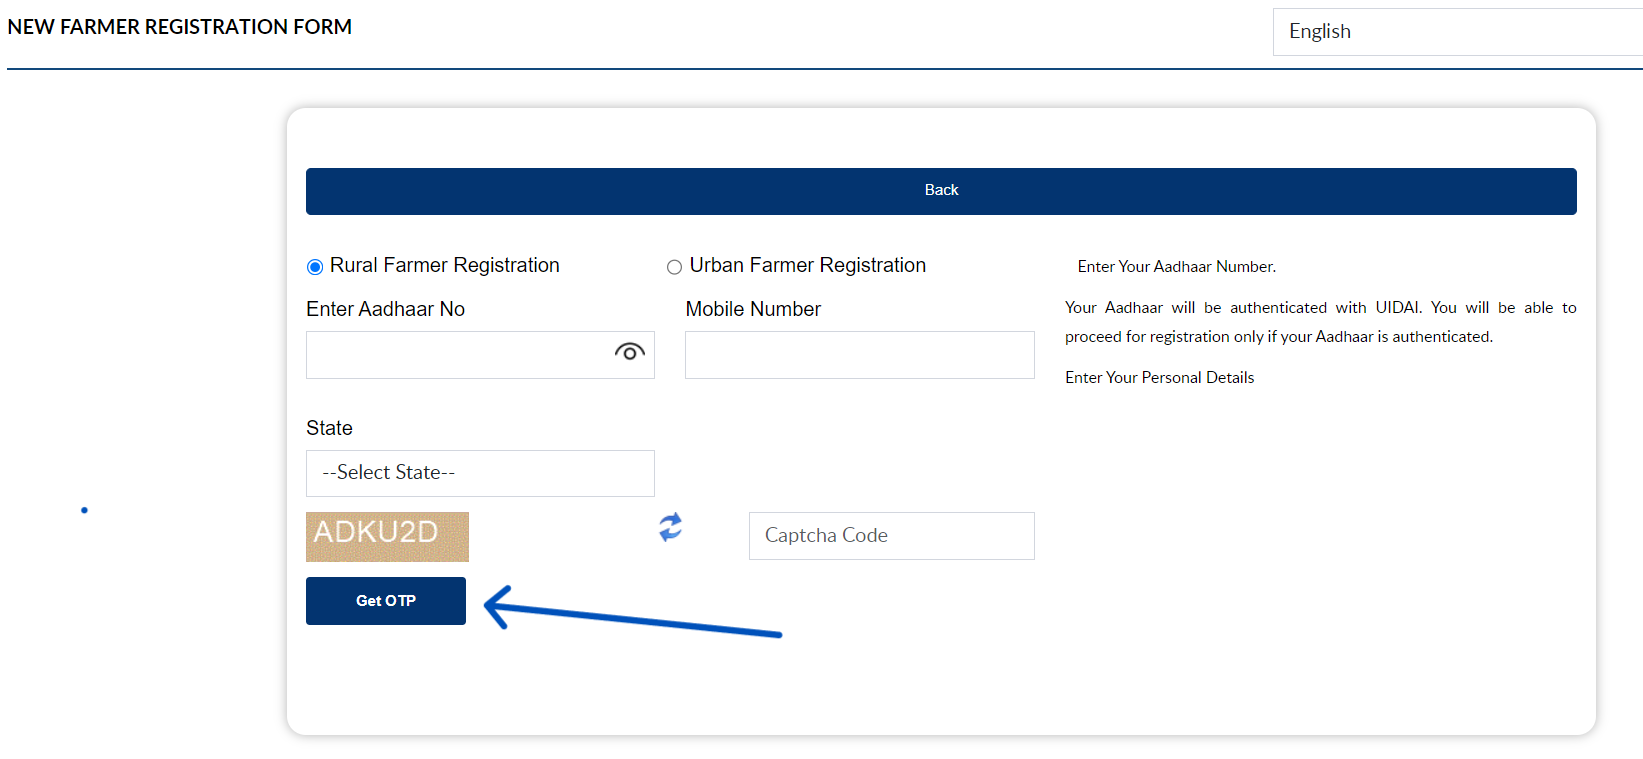 PM-Kisan New Farmer Registration Form